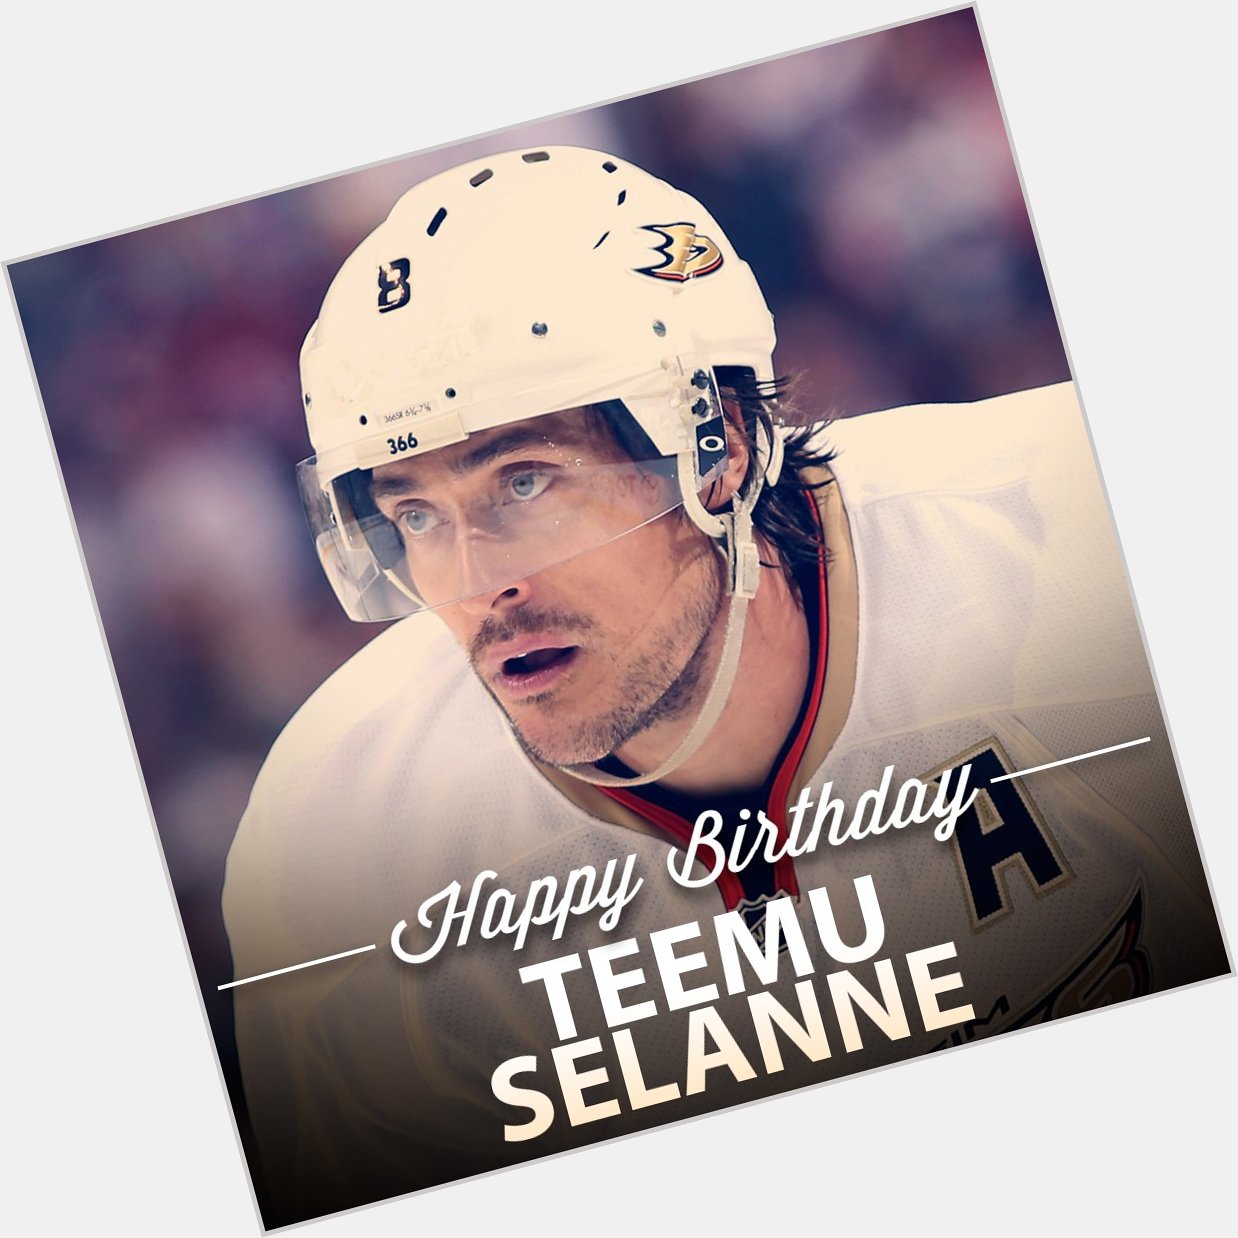 Happy birthday to the Finnish Flash, Teemu Selanne! 